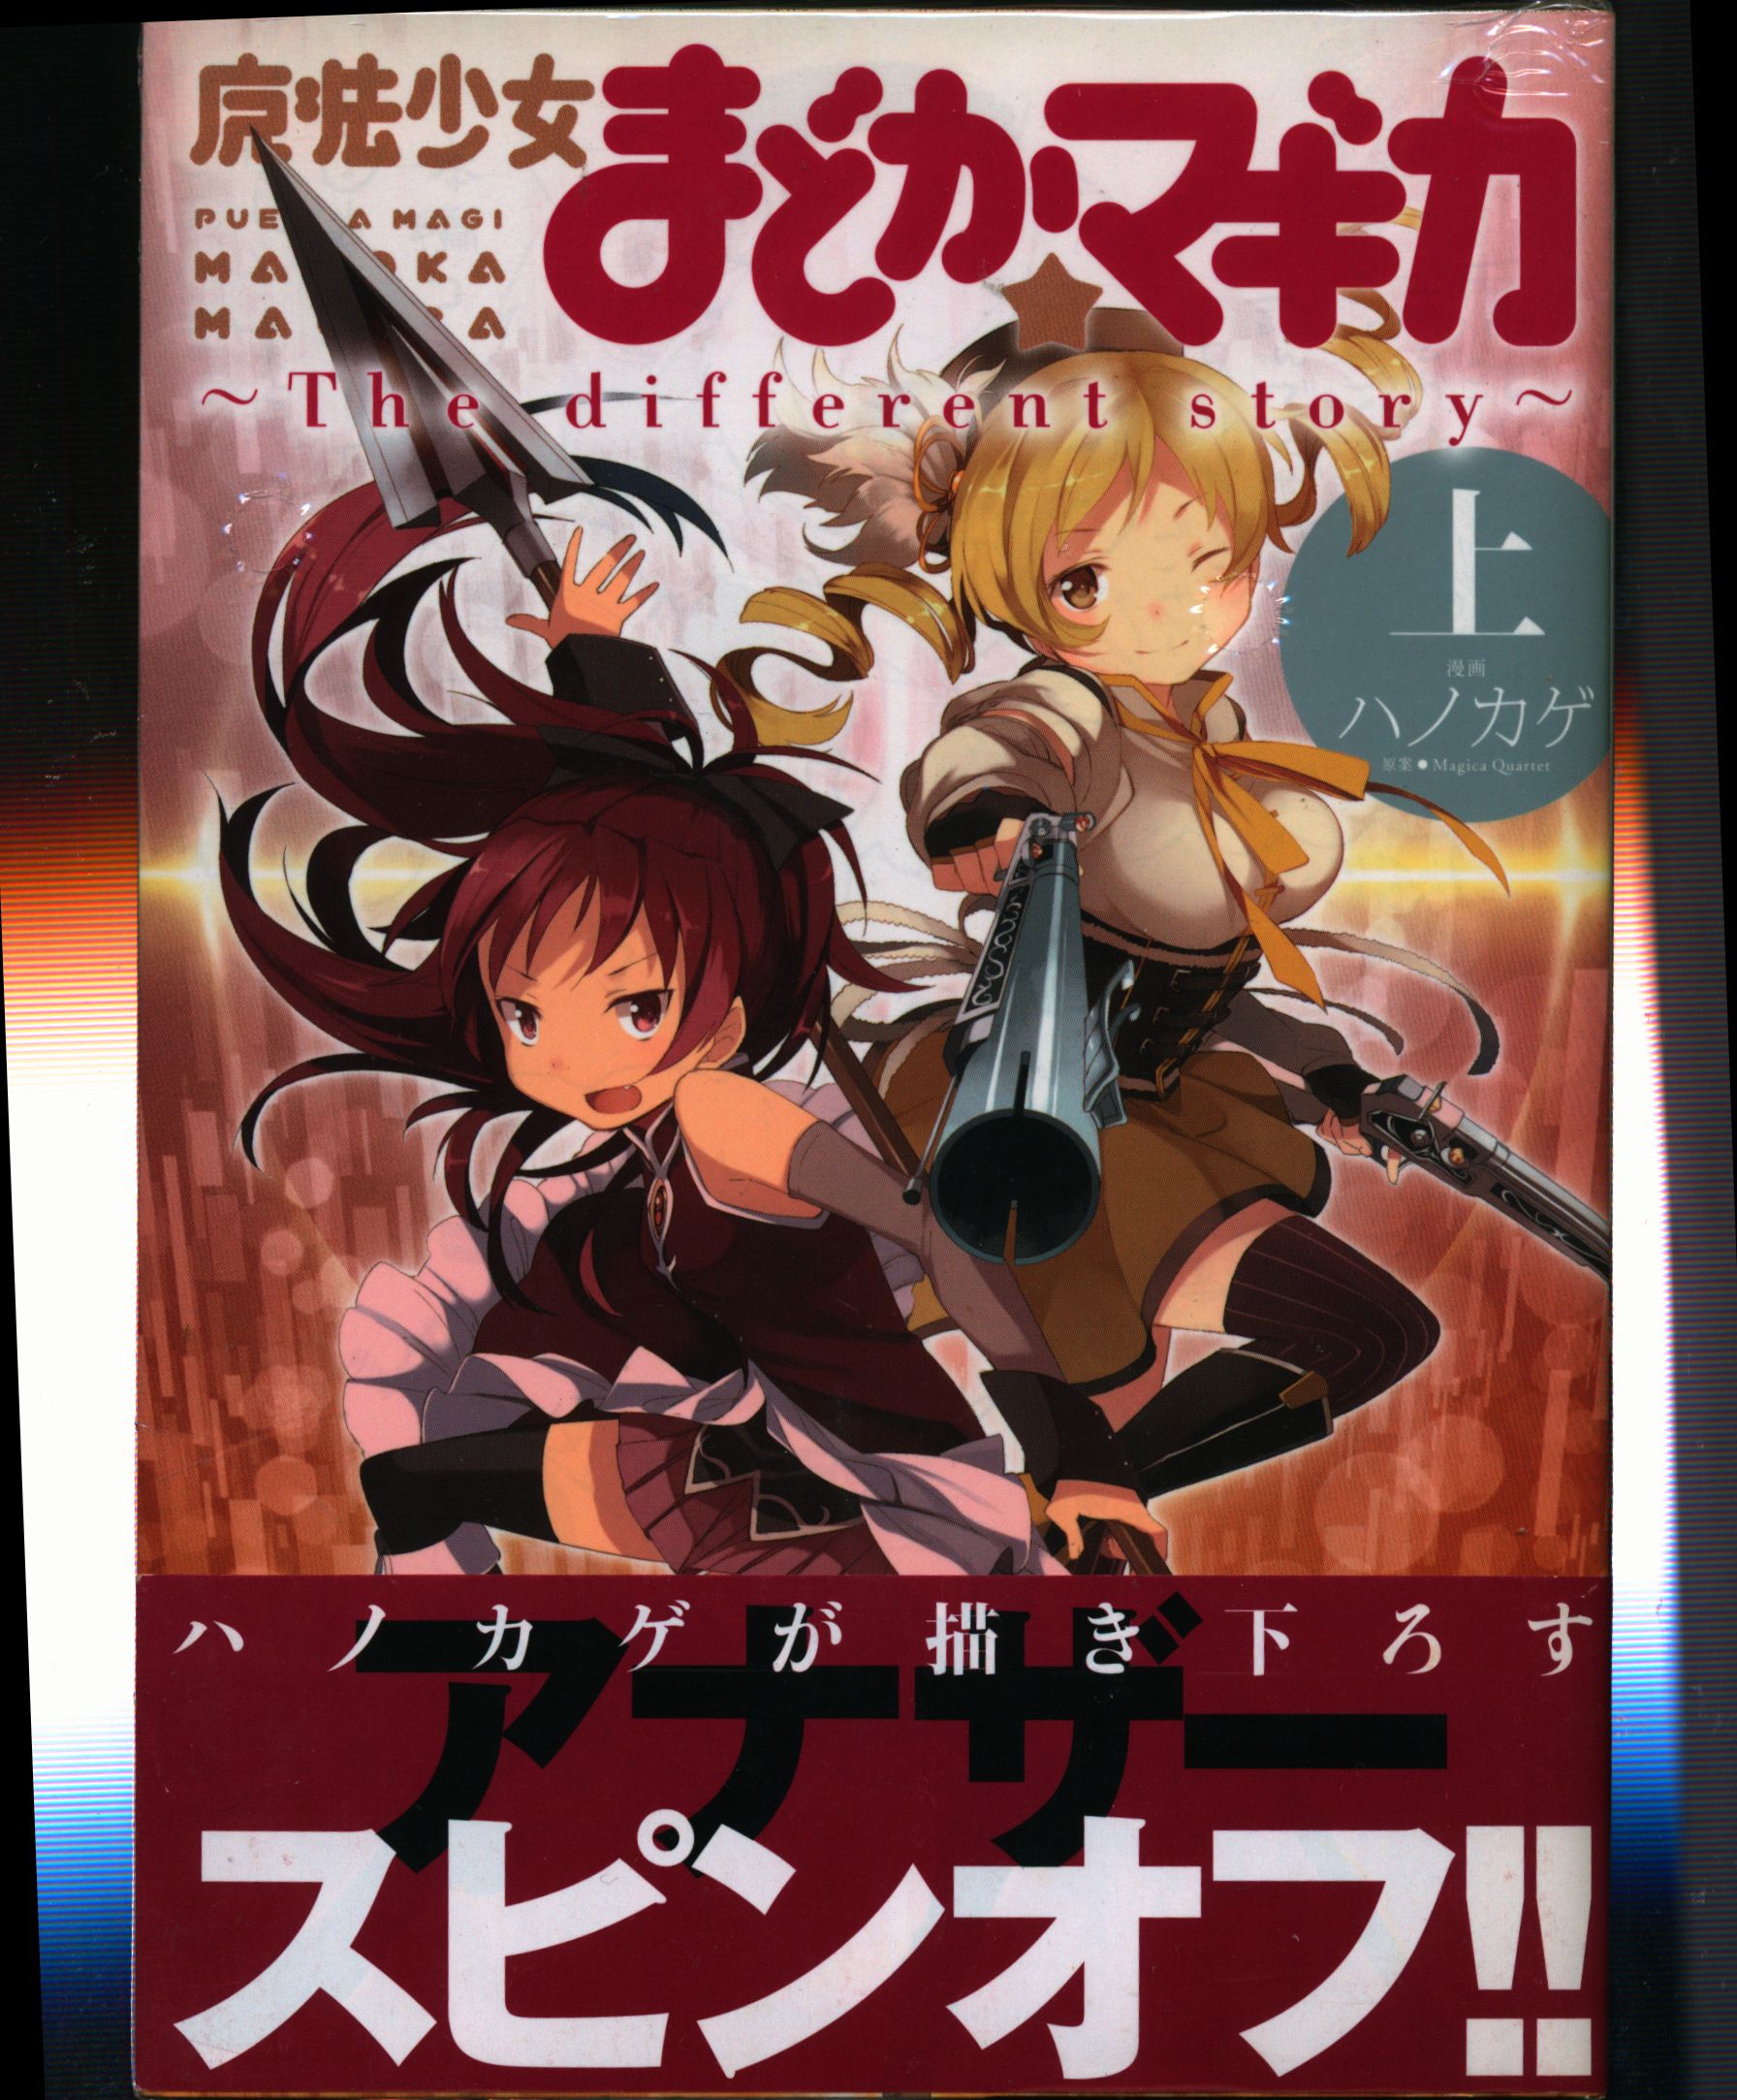 Houbunsha Manga Time Kr Comics Hanokage Puella Magi Madoka Magica The Different Story Complete 3 Volume Set Mandarake Online Shop